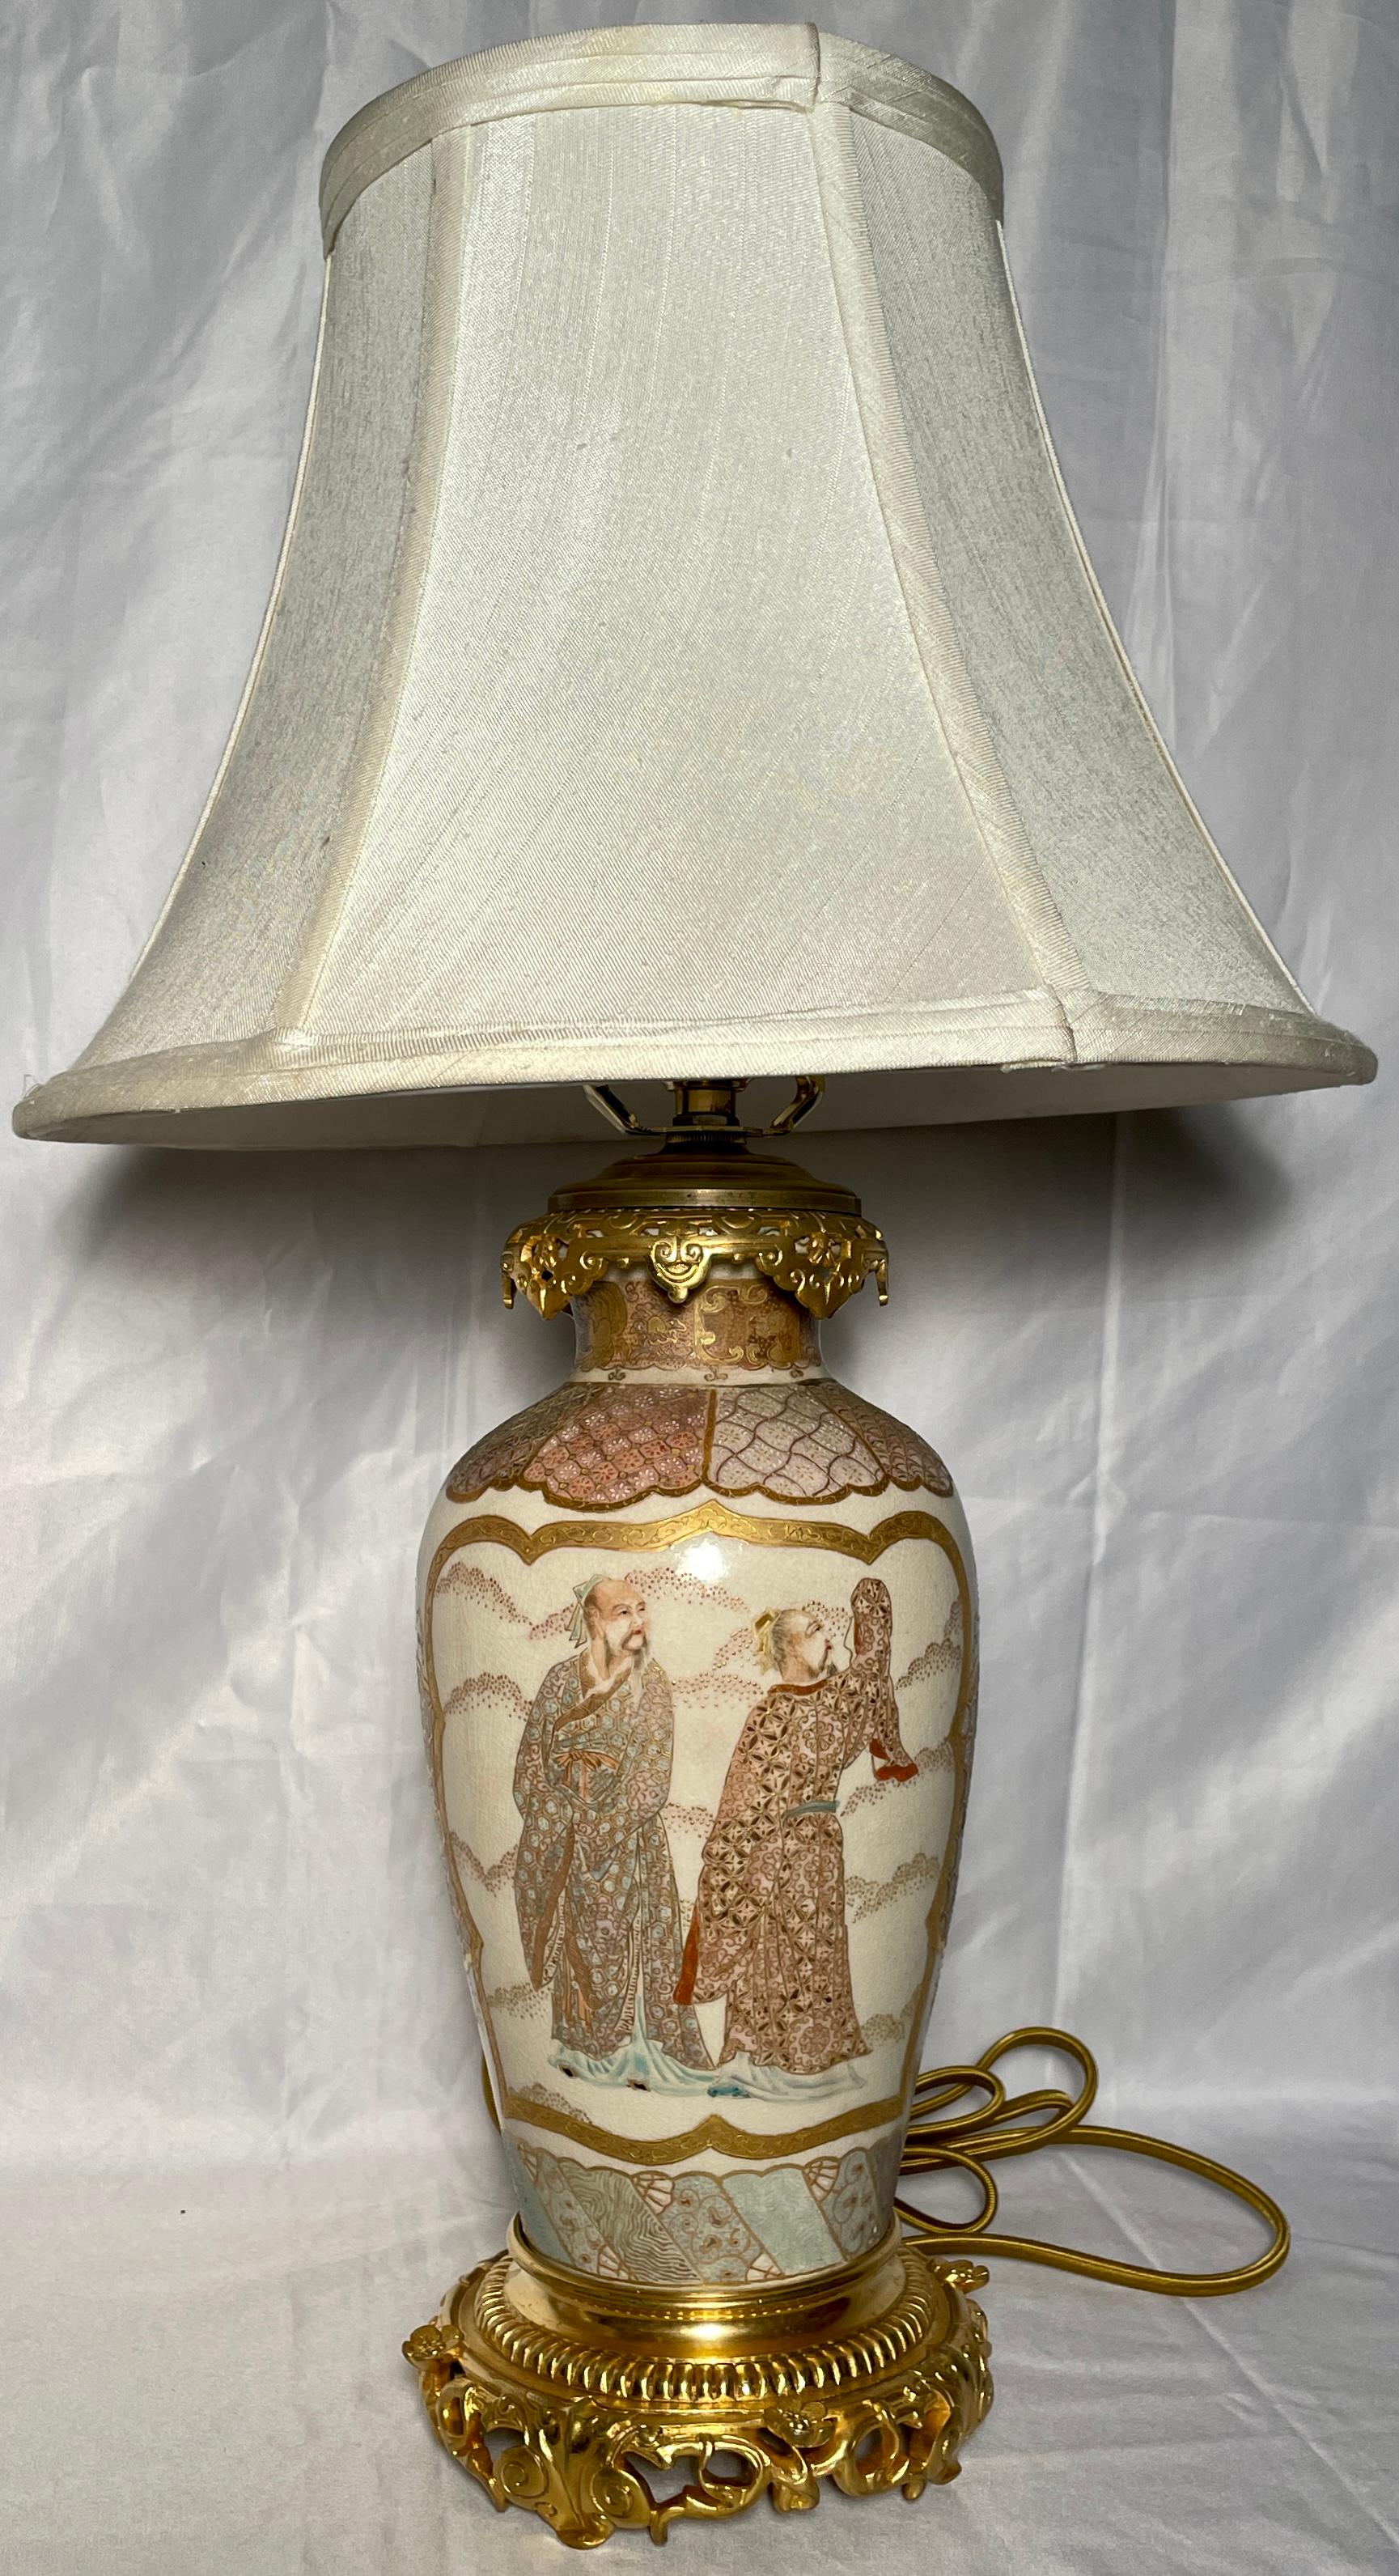 Pair antique exceptional quality Japanese Satsuma porcelain lamps with ormolu mounts, circa 1890.